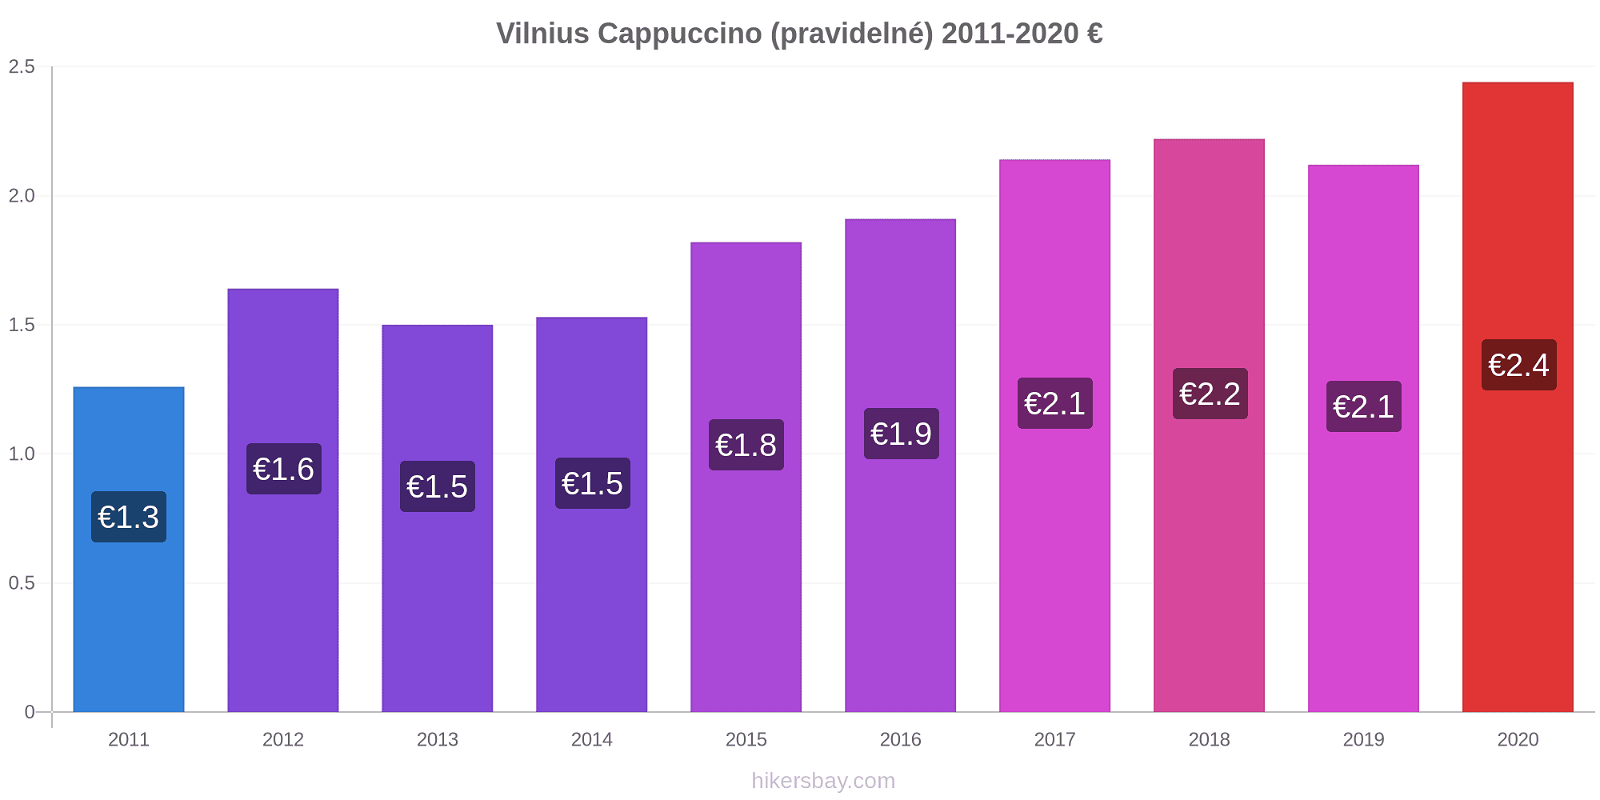 Vilnius změny cen Cappuccino (pravidelné) hikersbay.com